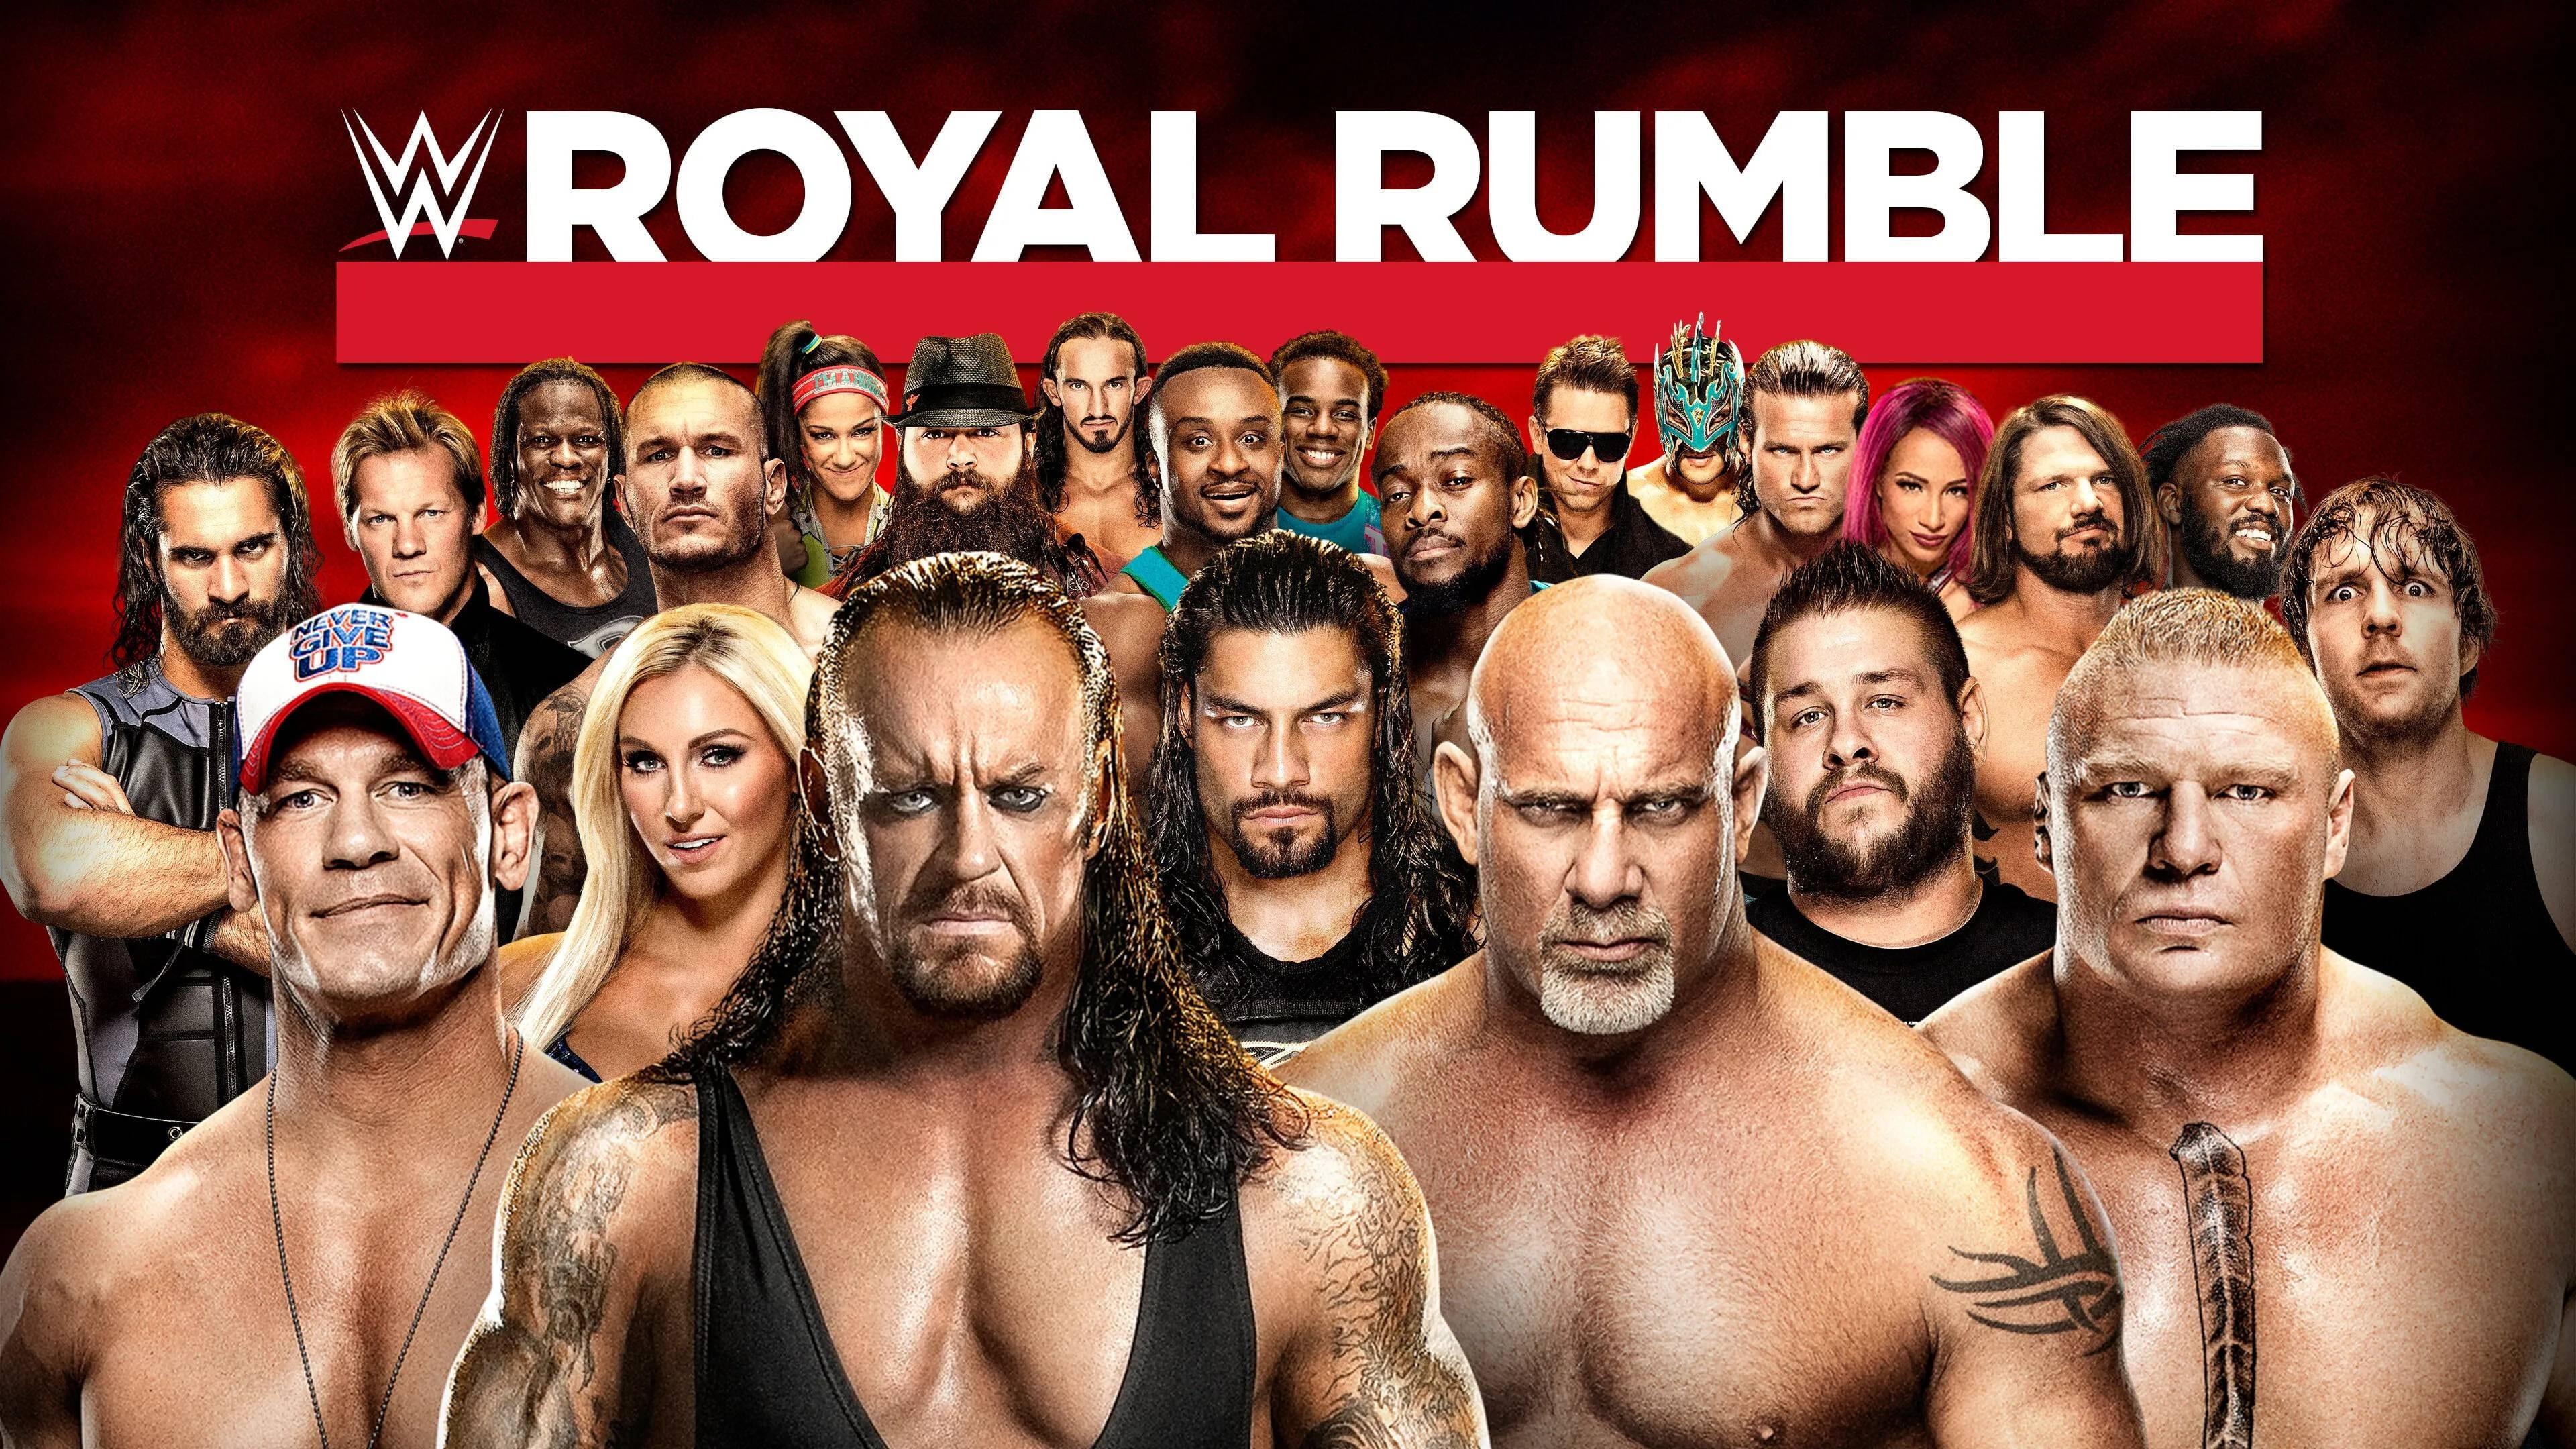 WWE Royal Rumble 2017 backdrop